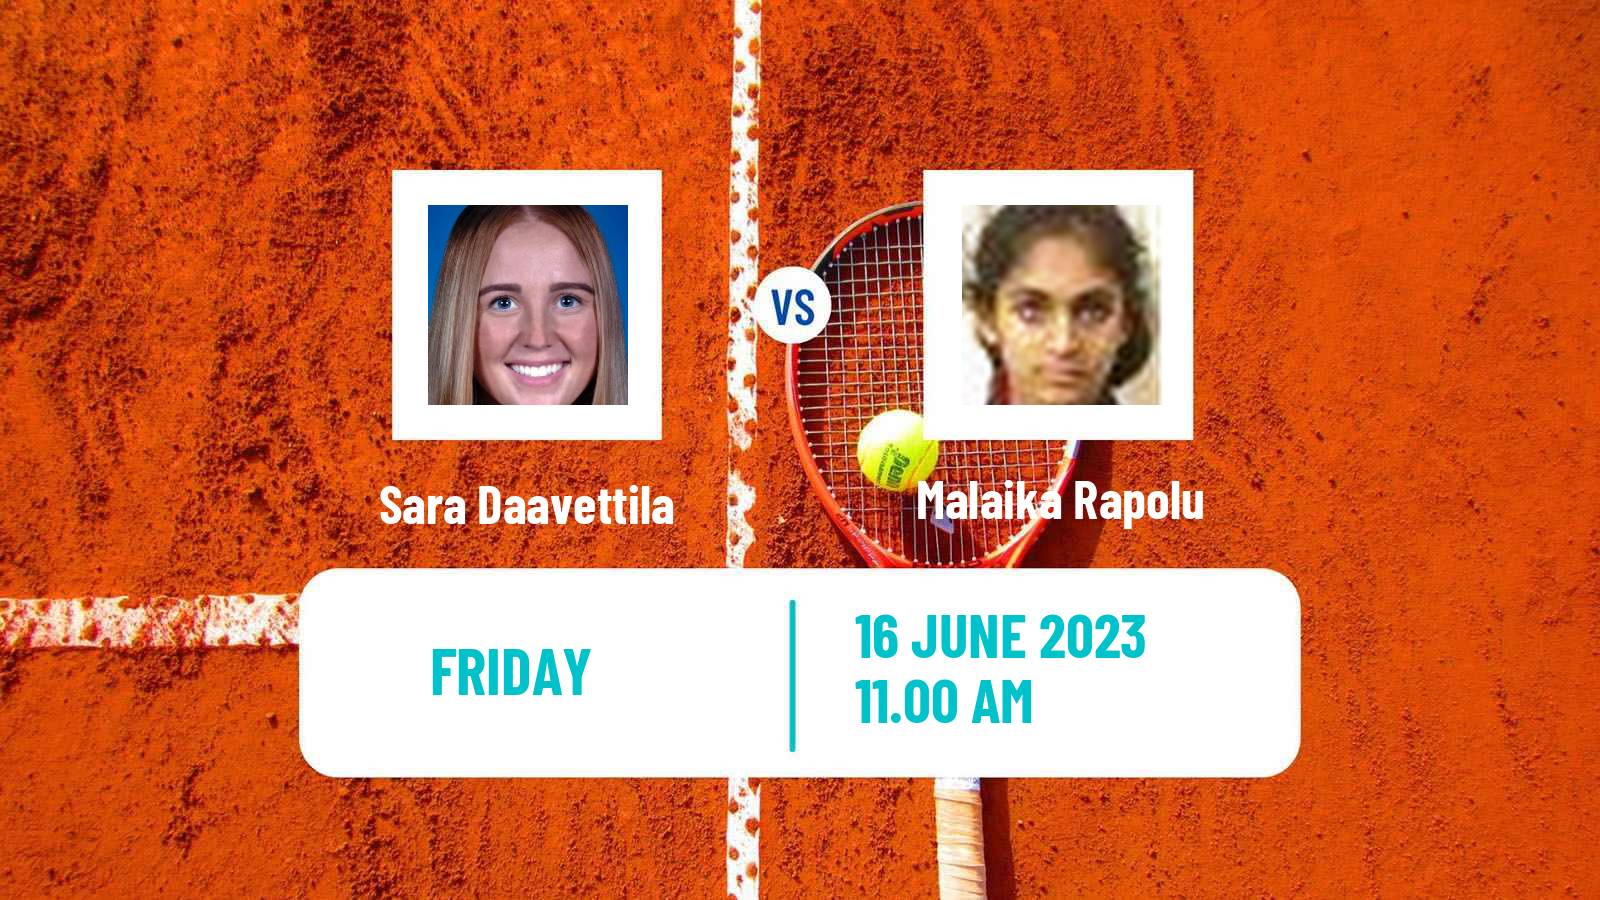 Tennis ITF W15 San Diego Ca 2 Women Sara Daavettila - Malaika Rapolu